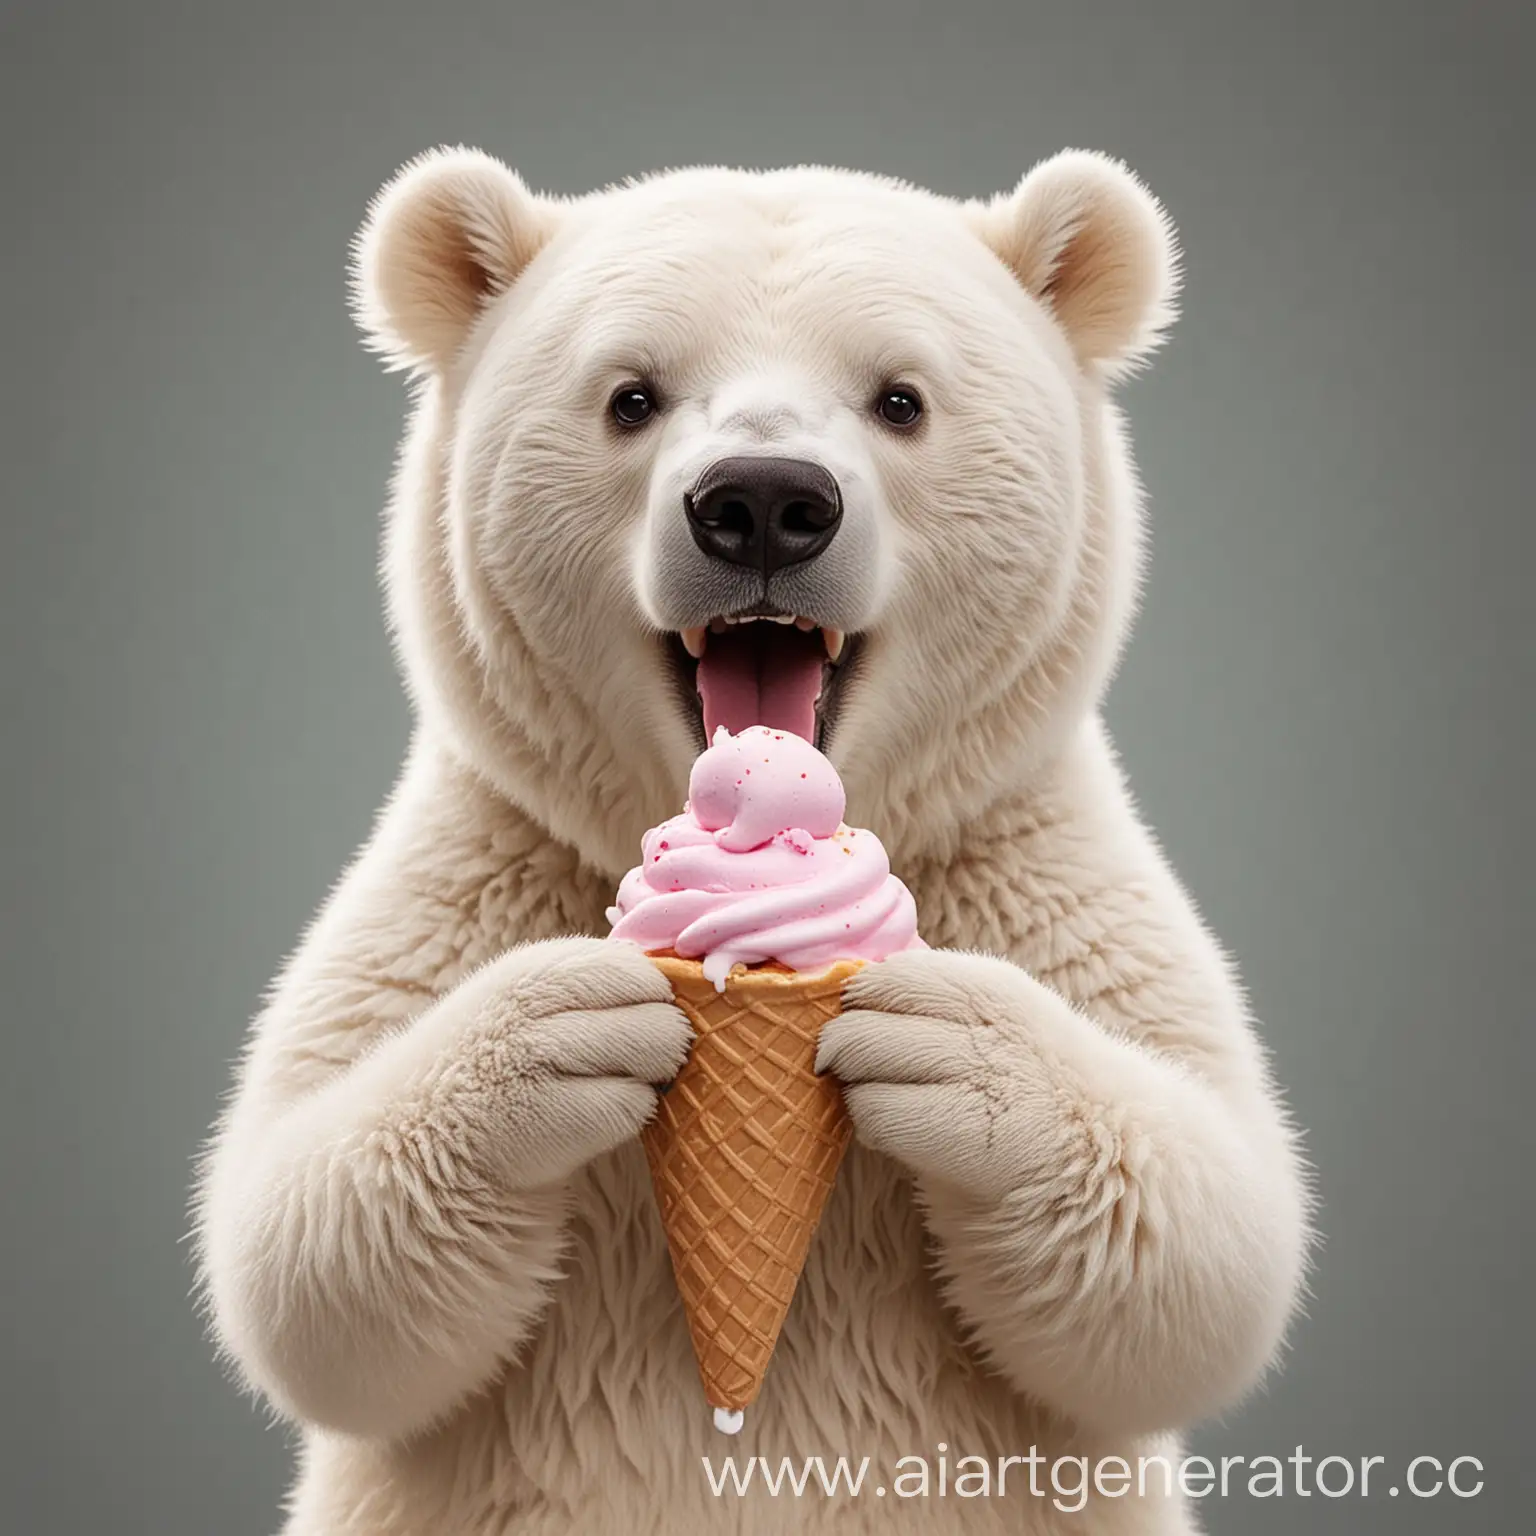 Smiling-Polar-Bear-Eating-Ice-Cream